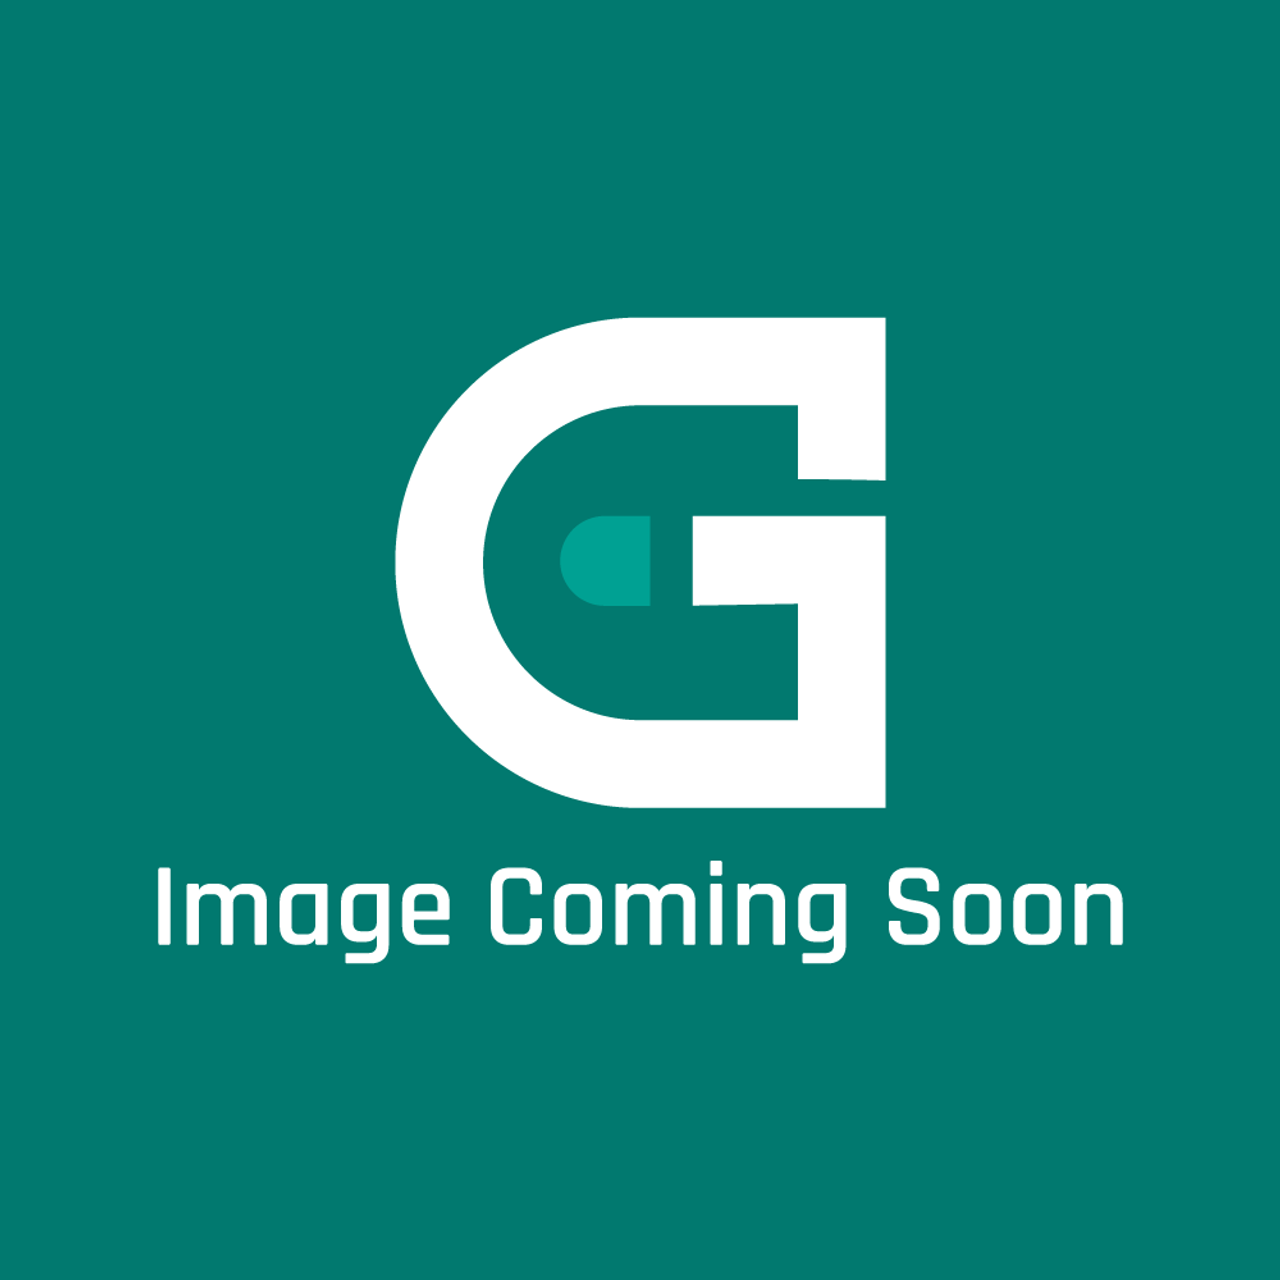 GE Appliances WB28X25657 - Injet Asm - Image Coming Soon!